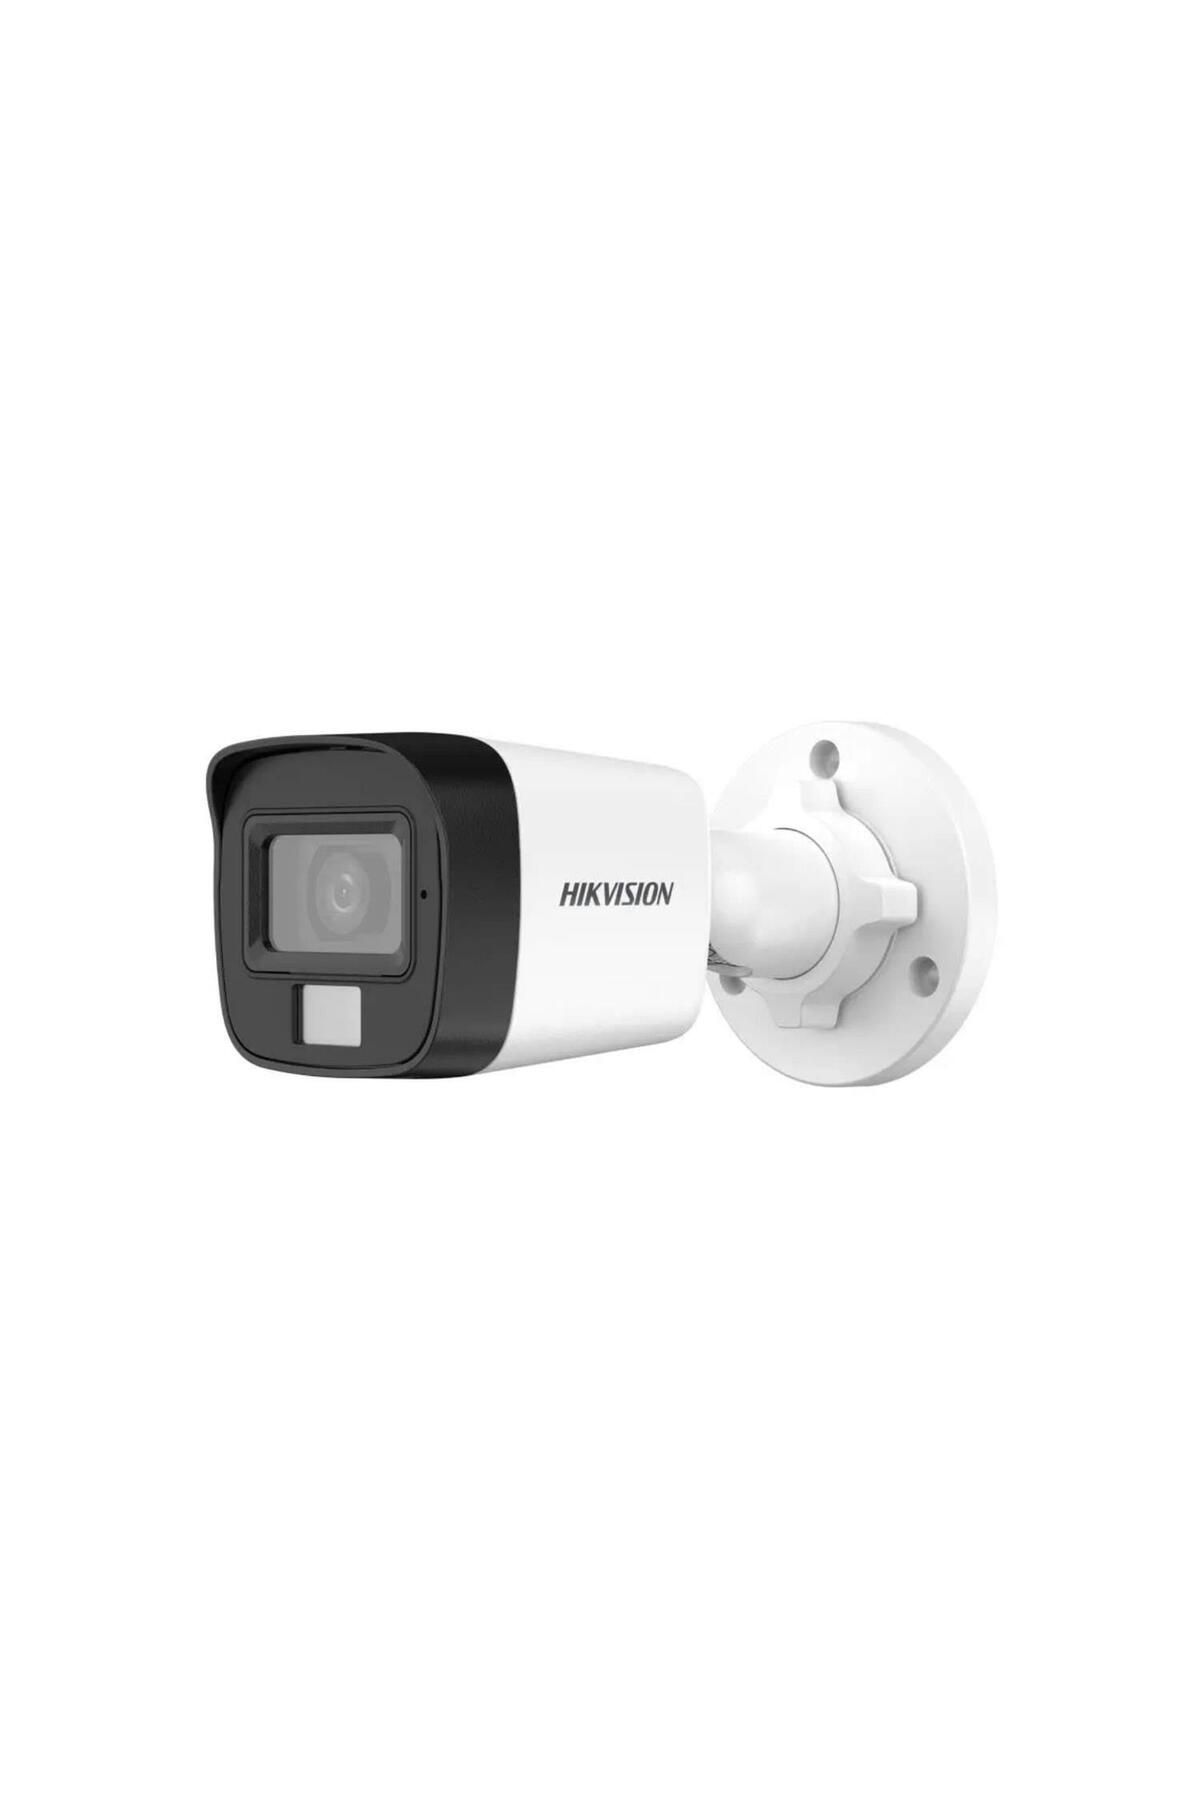 Hikvision DS-2CE16D0T-EXLPF 2 MP 2.8 mm 1080P AHD Bullet Kamera